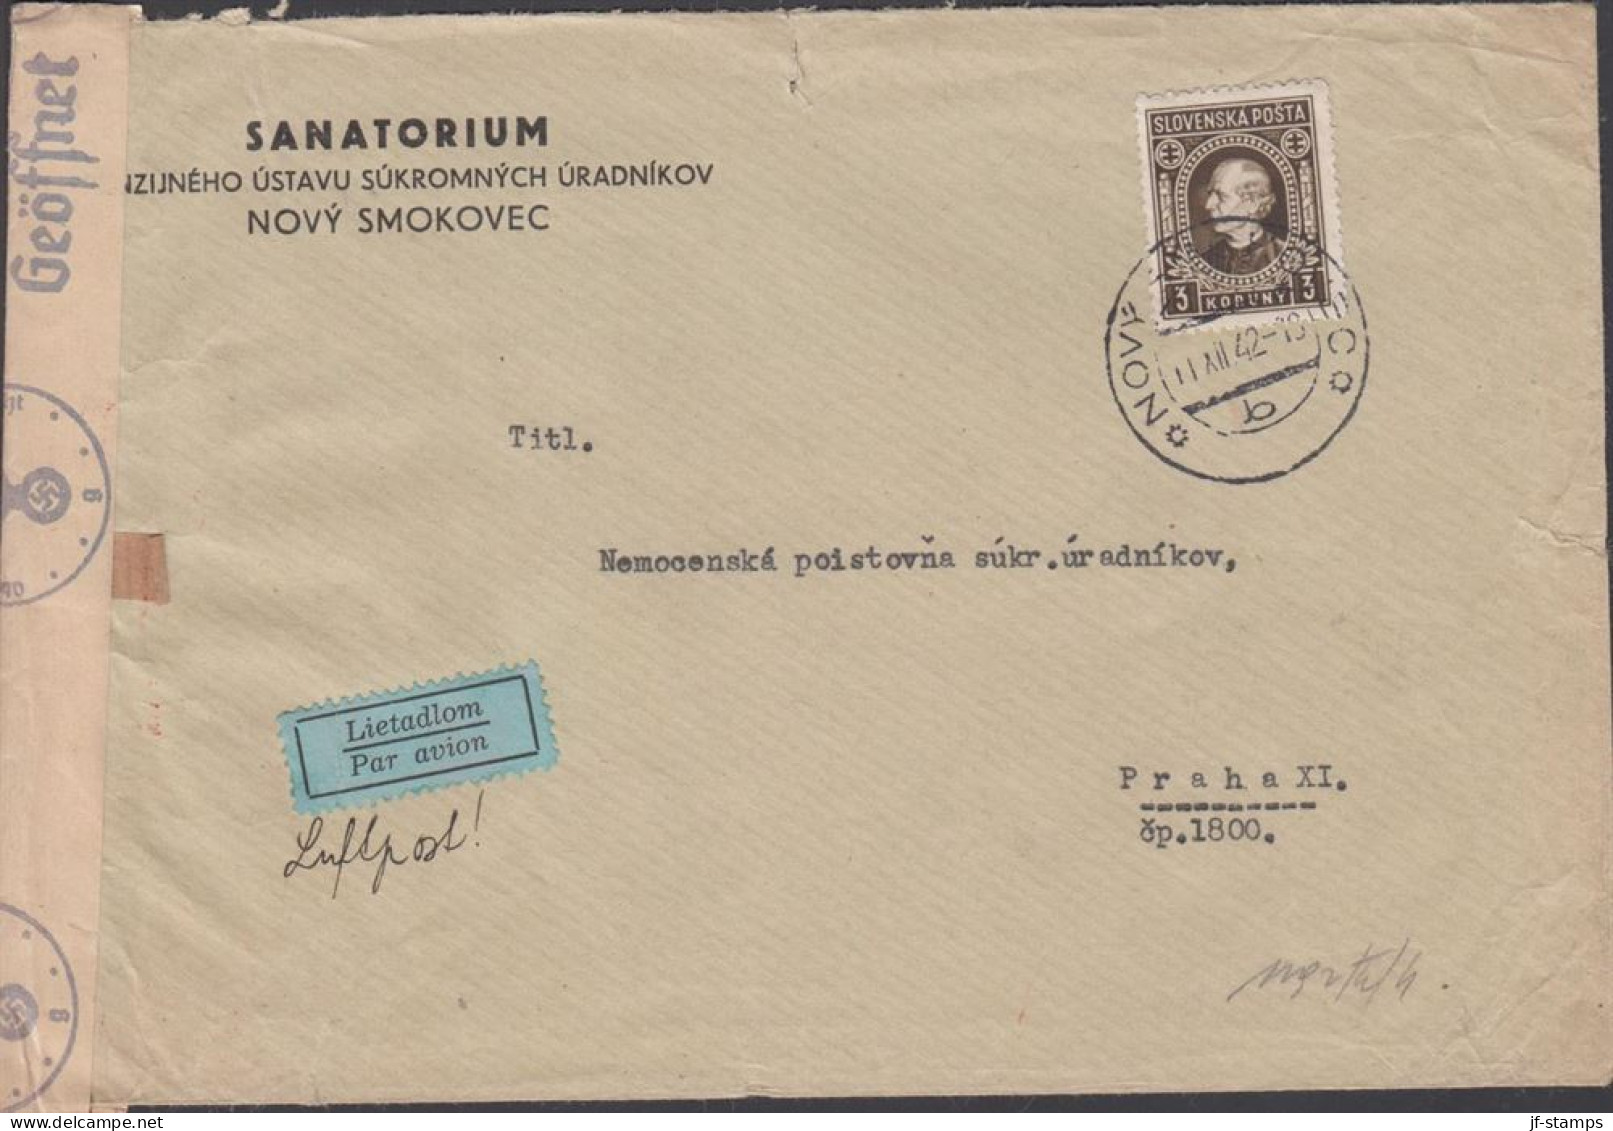 1942. SLOVENSKO Andrej Hlinka 3 KORUNY On Censored Cover Cancelled NOVY SMOKOVEC 11 XII 42 To ... (Michel 42) - JF441418 - Covers & Documents